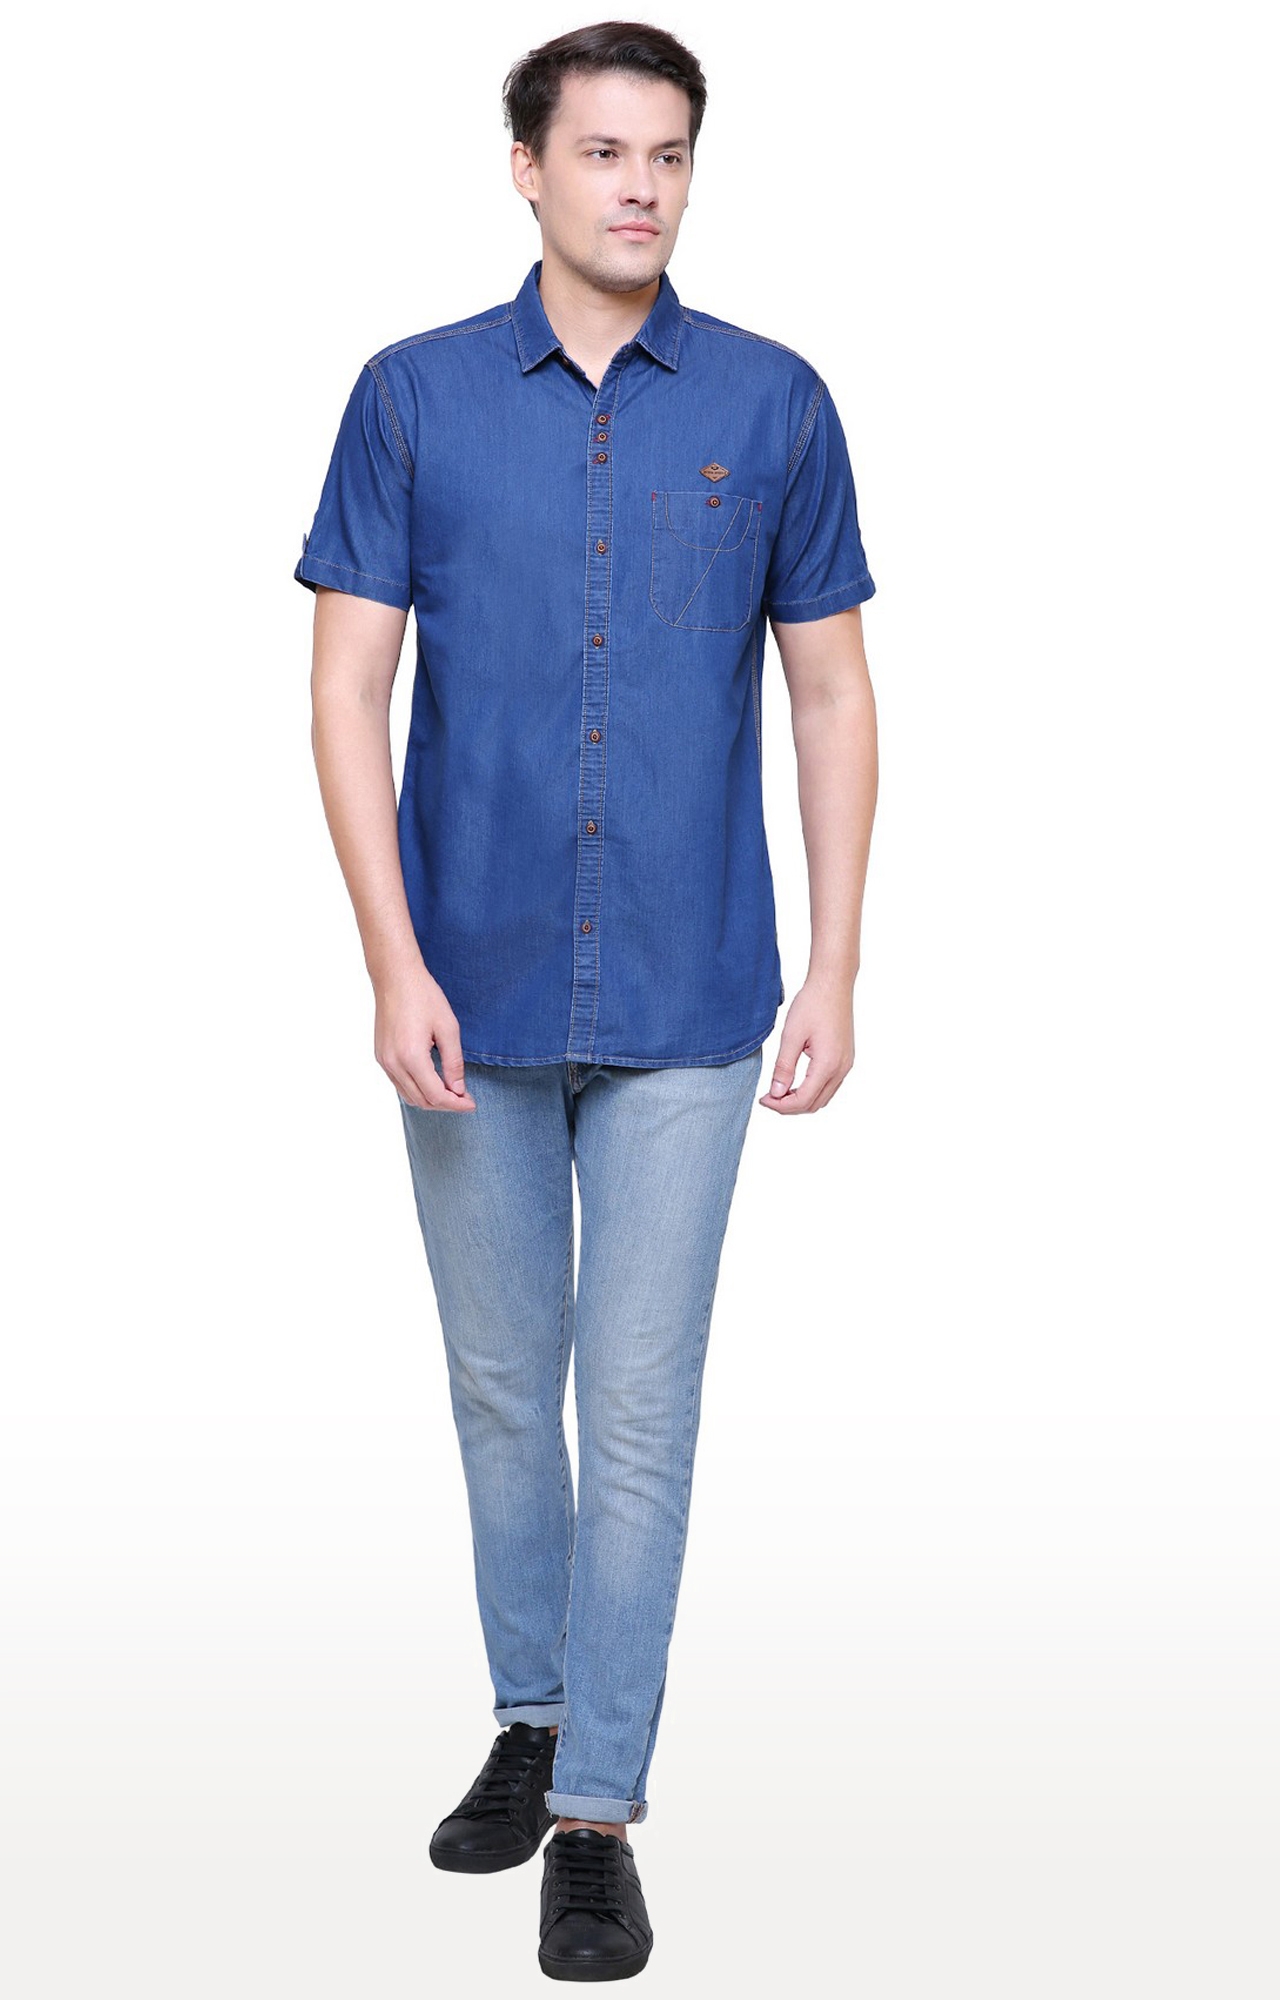 Kuons Avenue | Kuons Avenue Men's True Blue Half Sleeve Denim Shirt 1